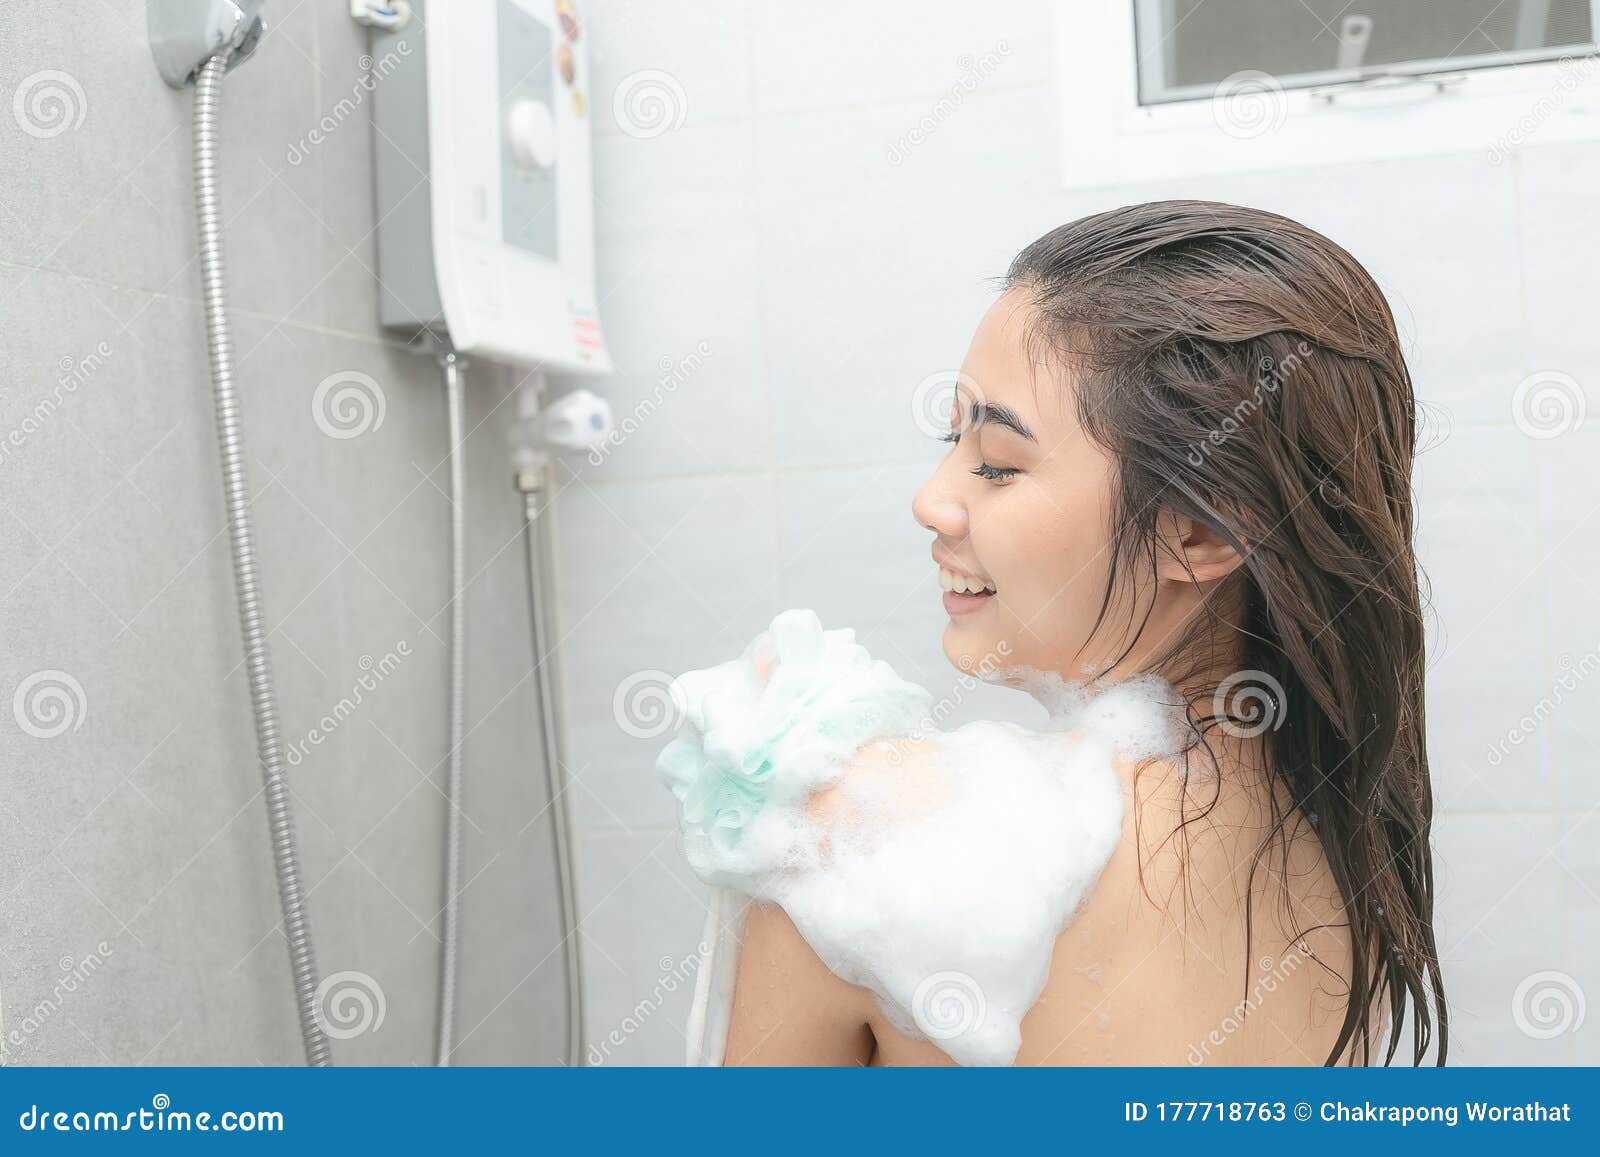 Asian girl in the shower